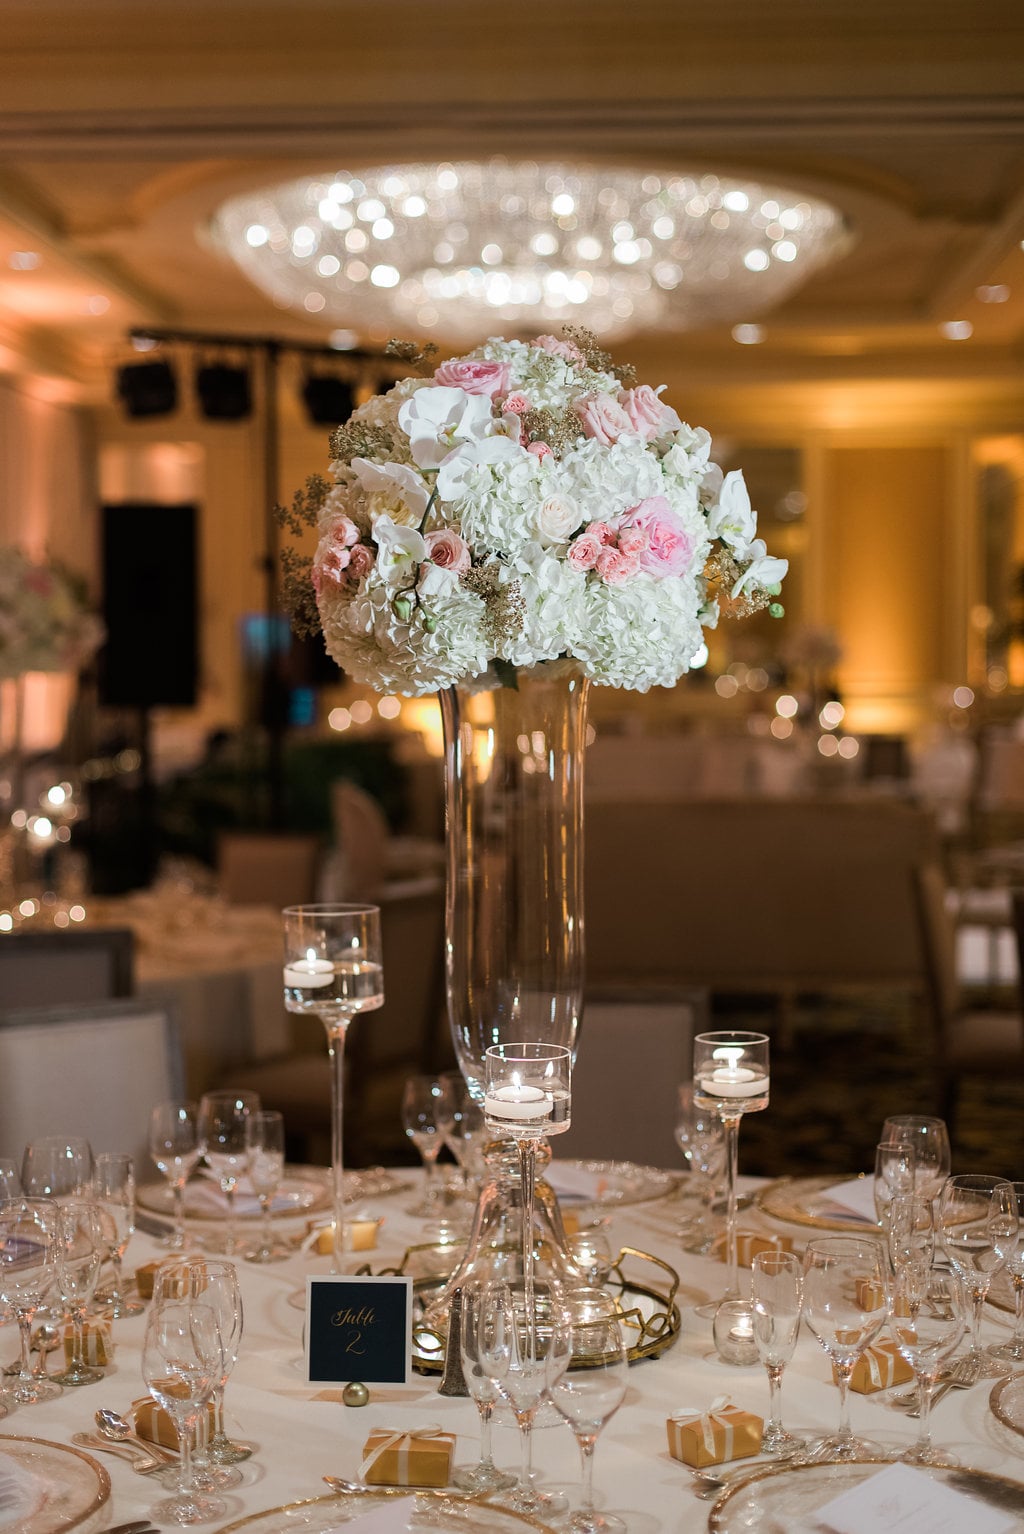 Charleston-place-hotel-ballroom-wedding-reception